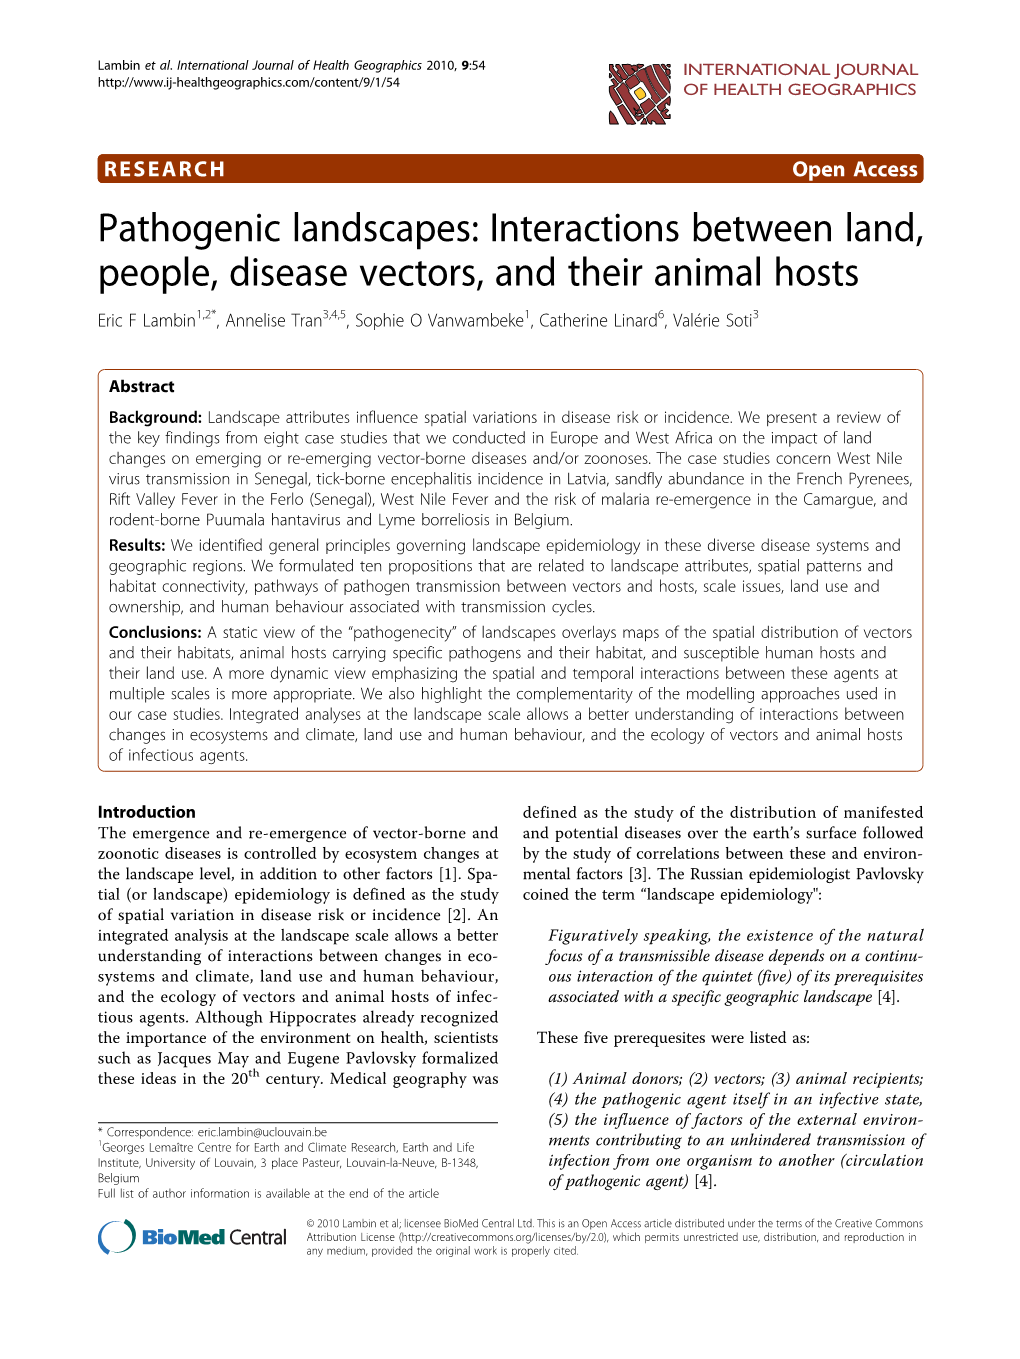 Interactions Between Land, People, Disease Vectors, and Their Animal